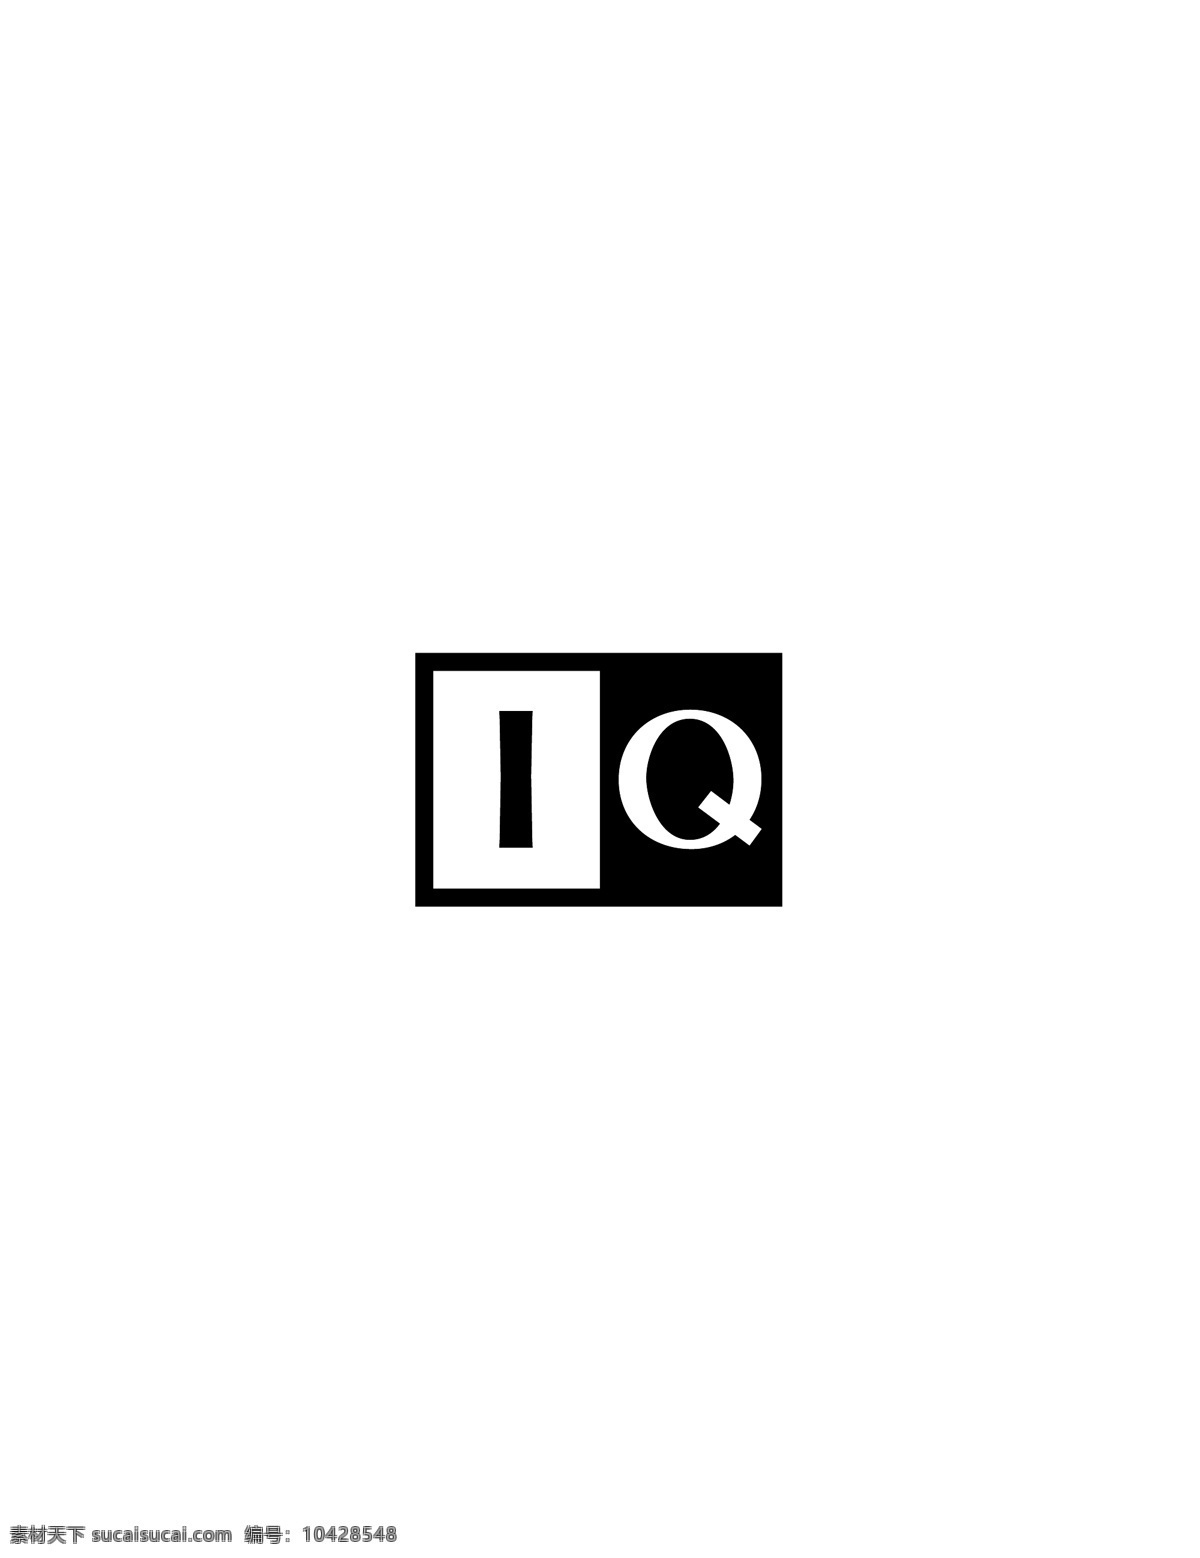 iq免费下载 logo大全 logo 设计欣赏 商业矢量 矢量下载 iq 传统 企业 标志设计 欣赏 网页矢量 矢量图 其他矢量图